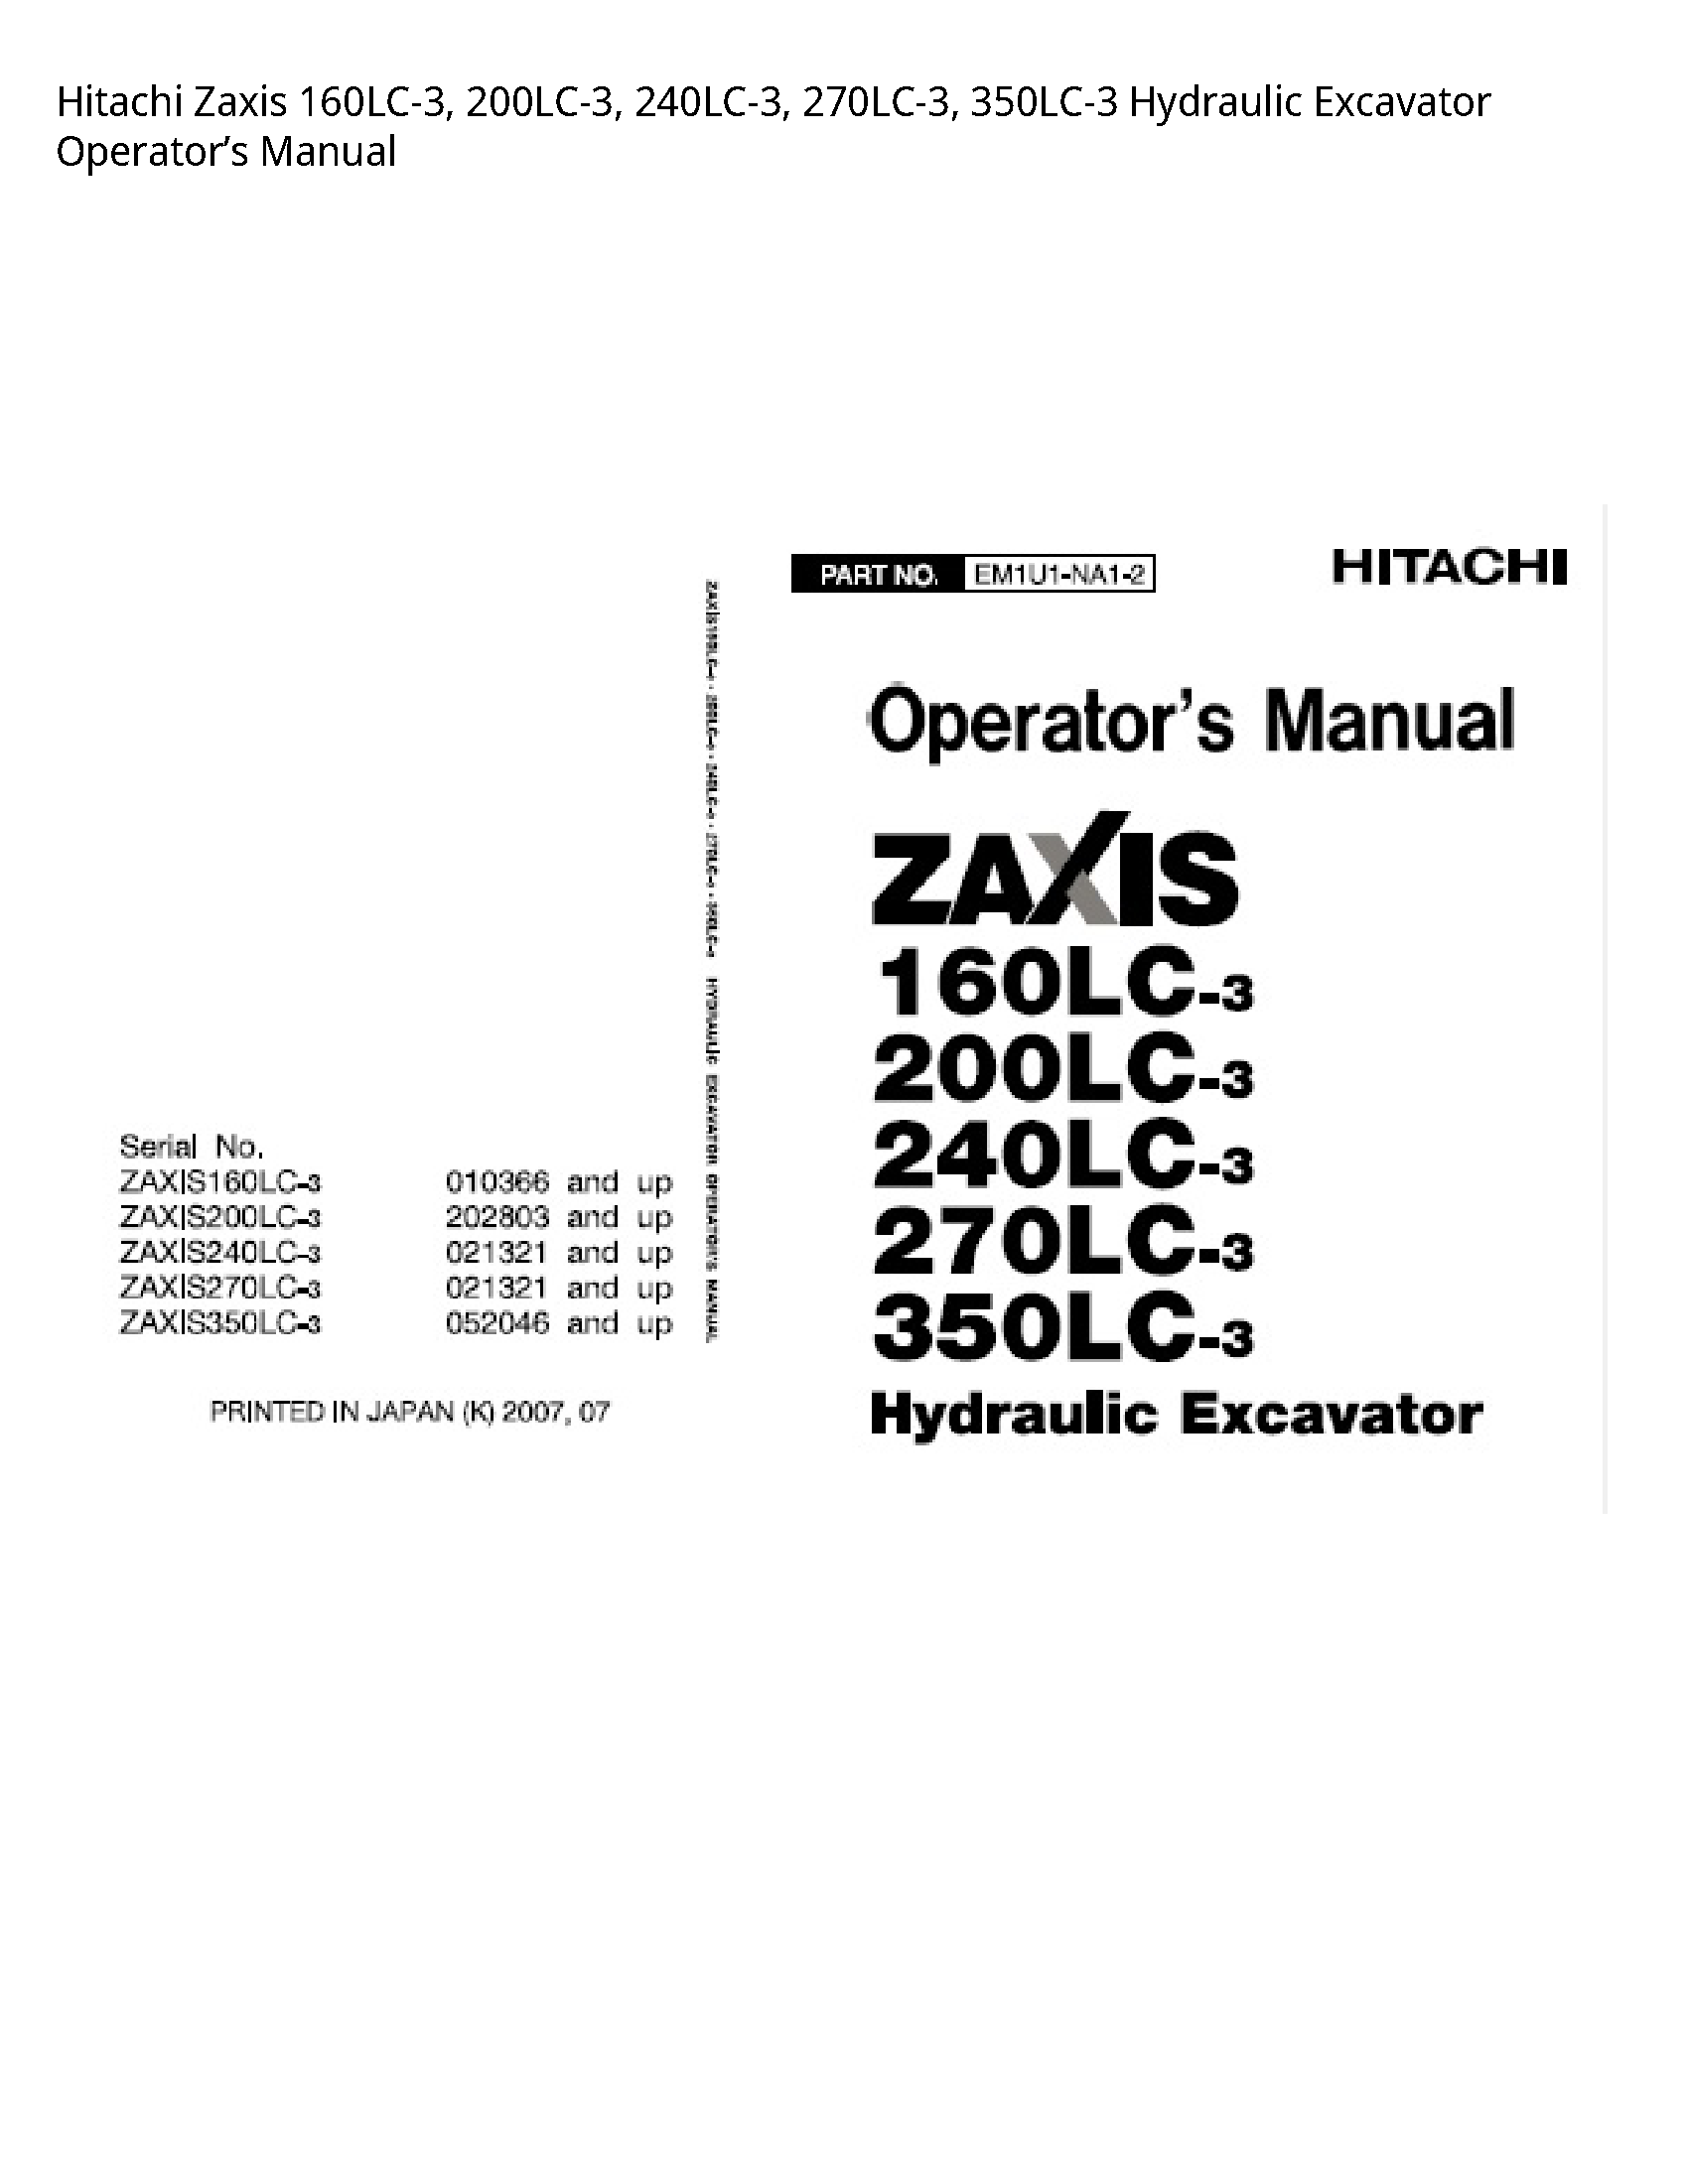 Hitachi 160LC-3 Zaxis Hydraulic Excavator Operator’s manual